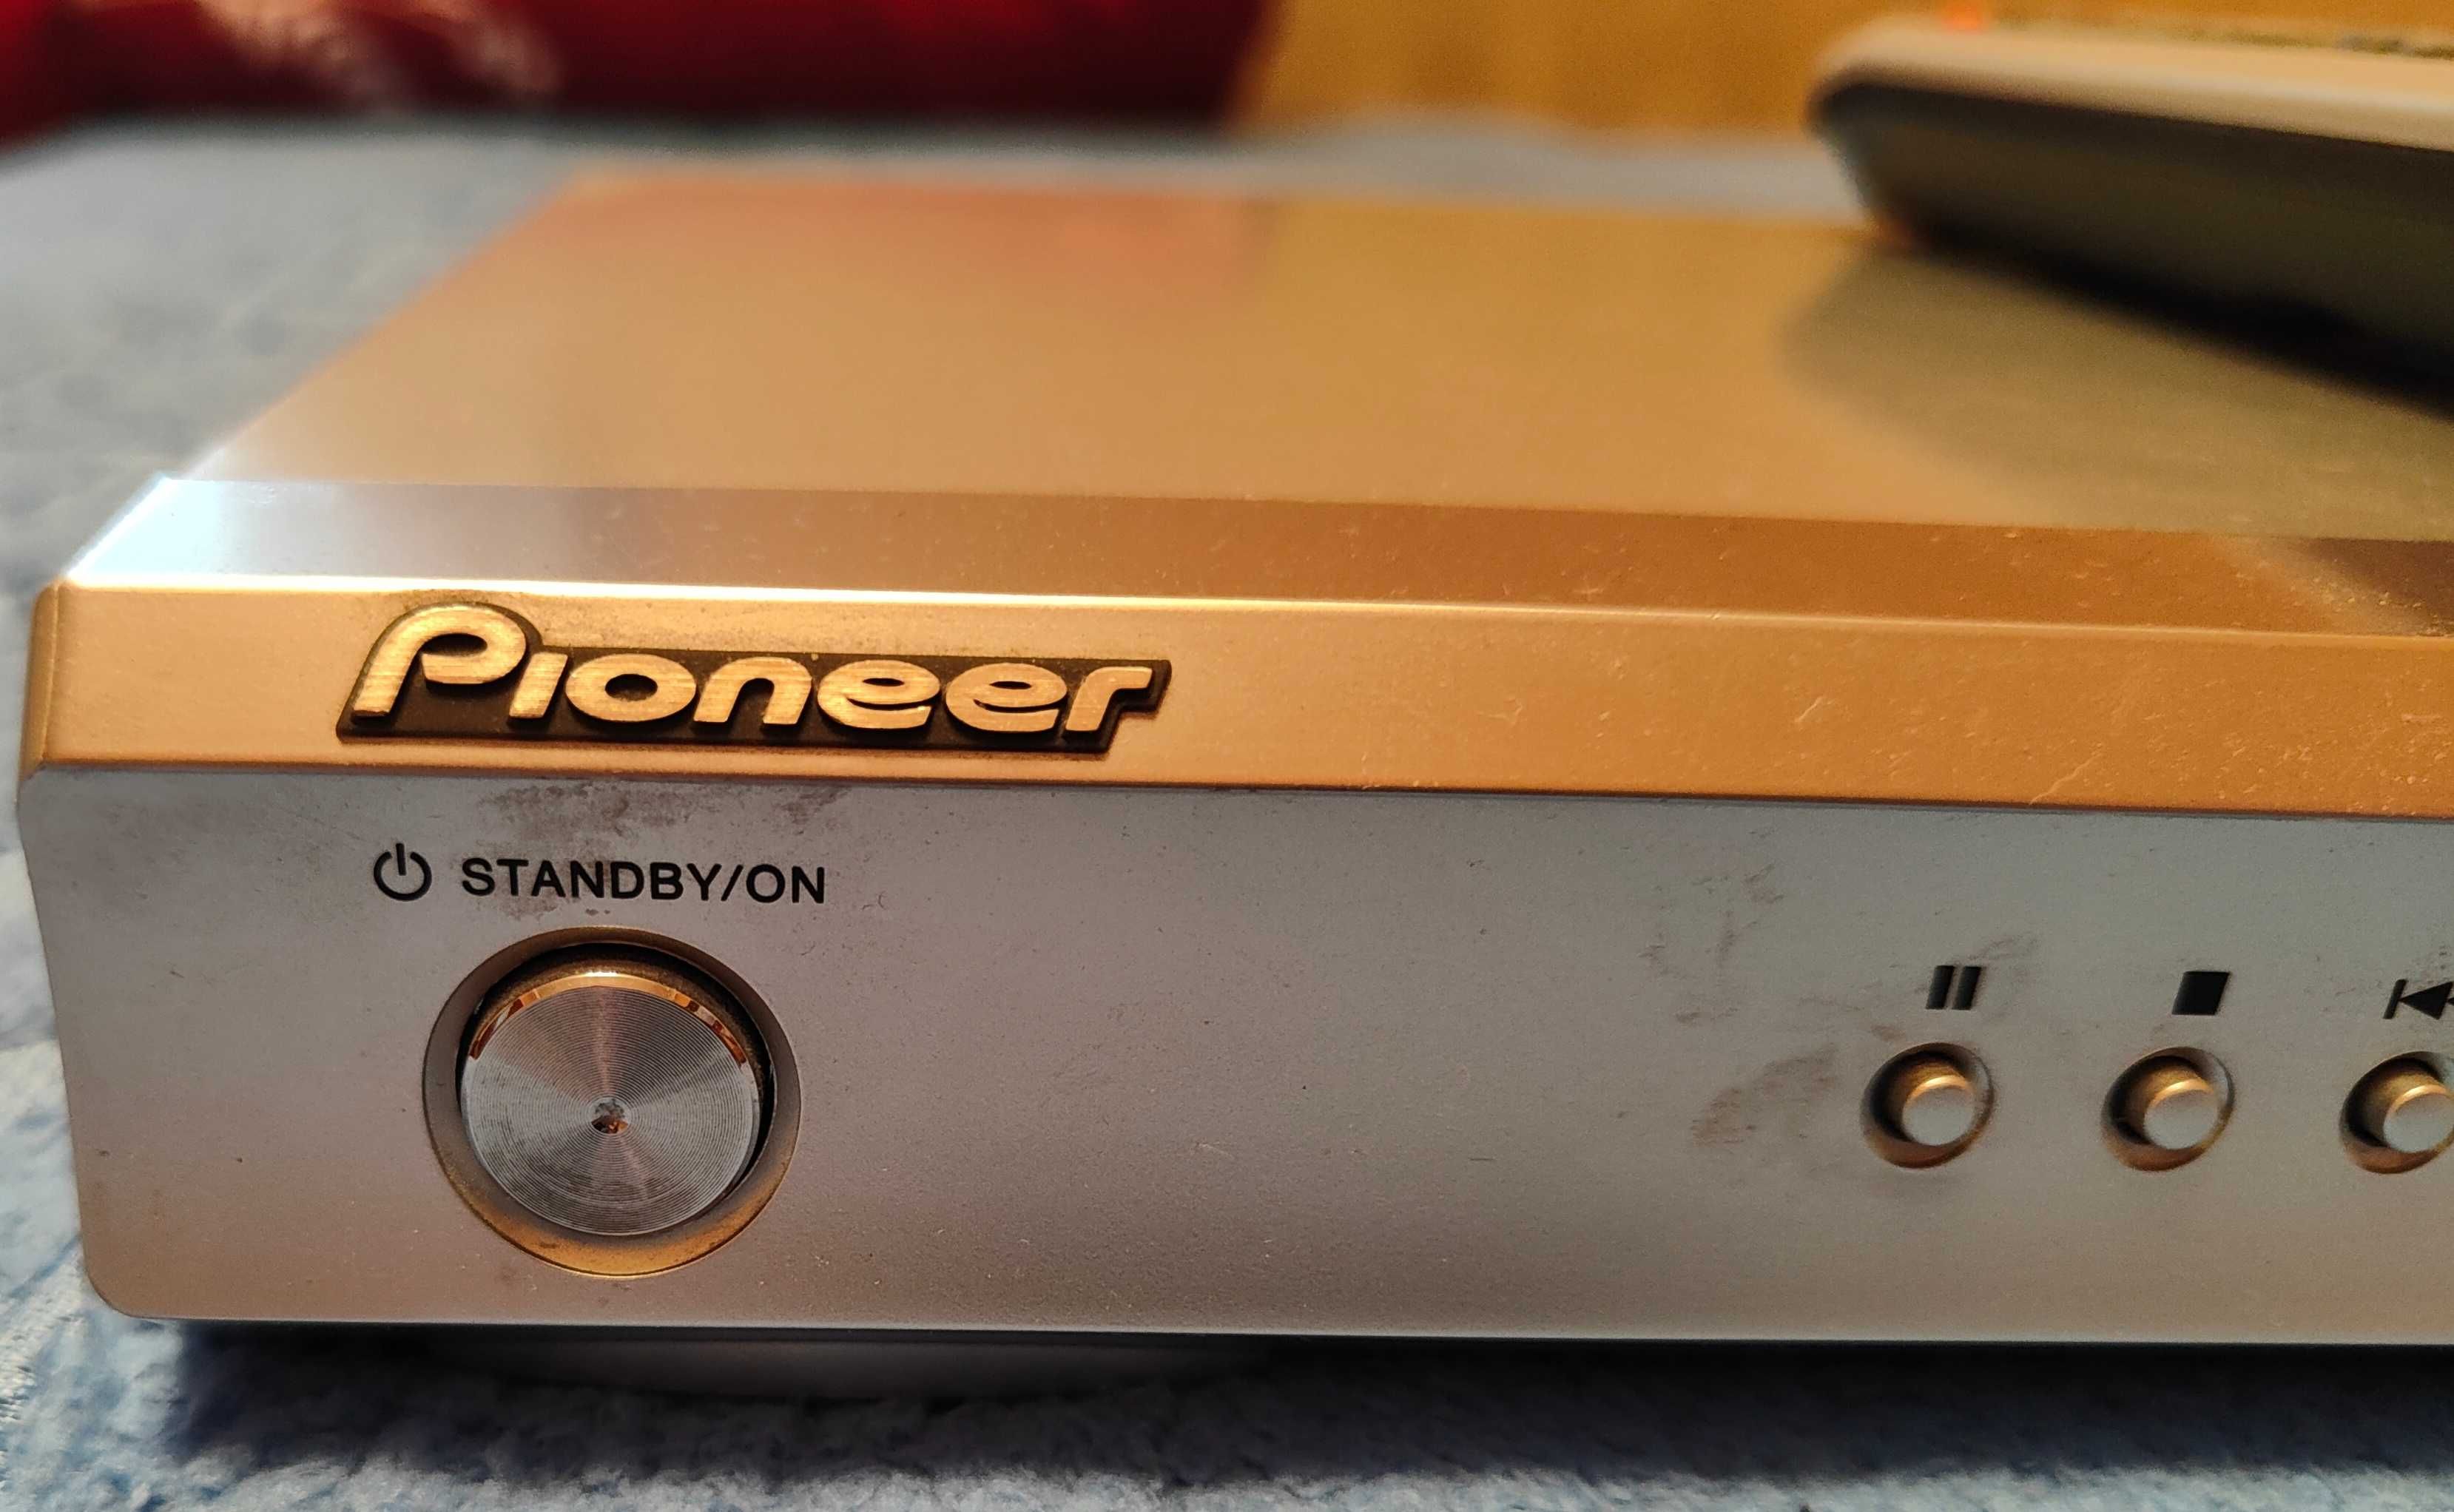 Продам DVD-програвач Pioneer DV-585A-S